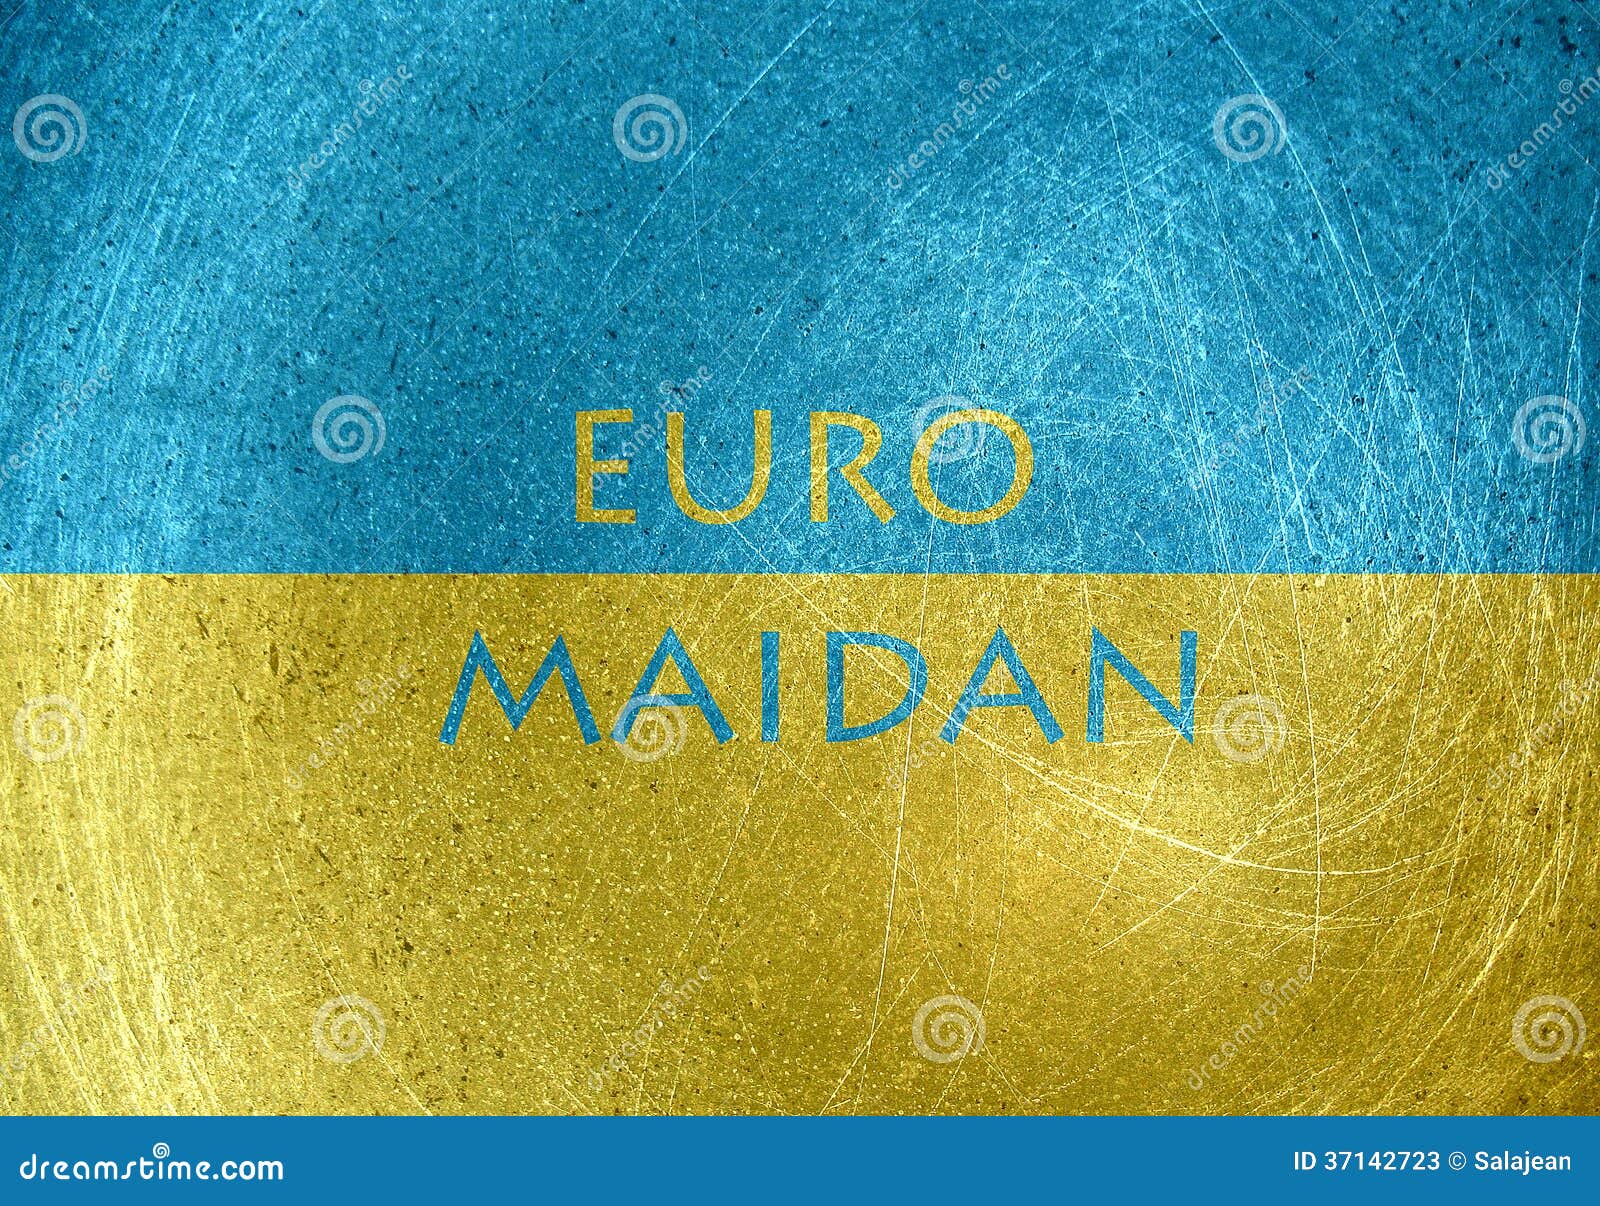 euromaidan - euro square motif with the flag of ukraine